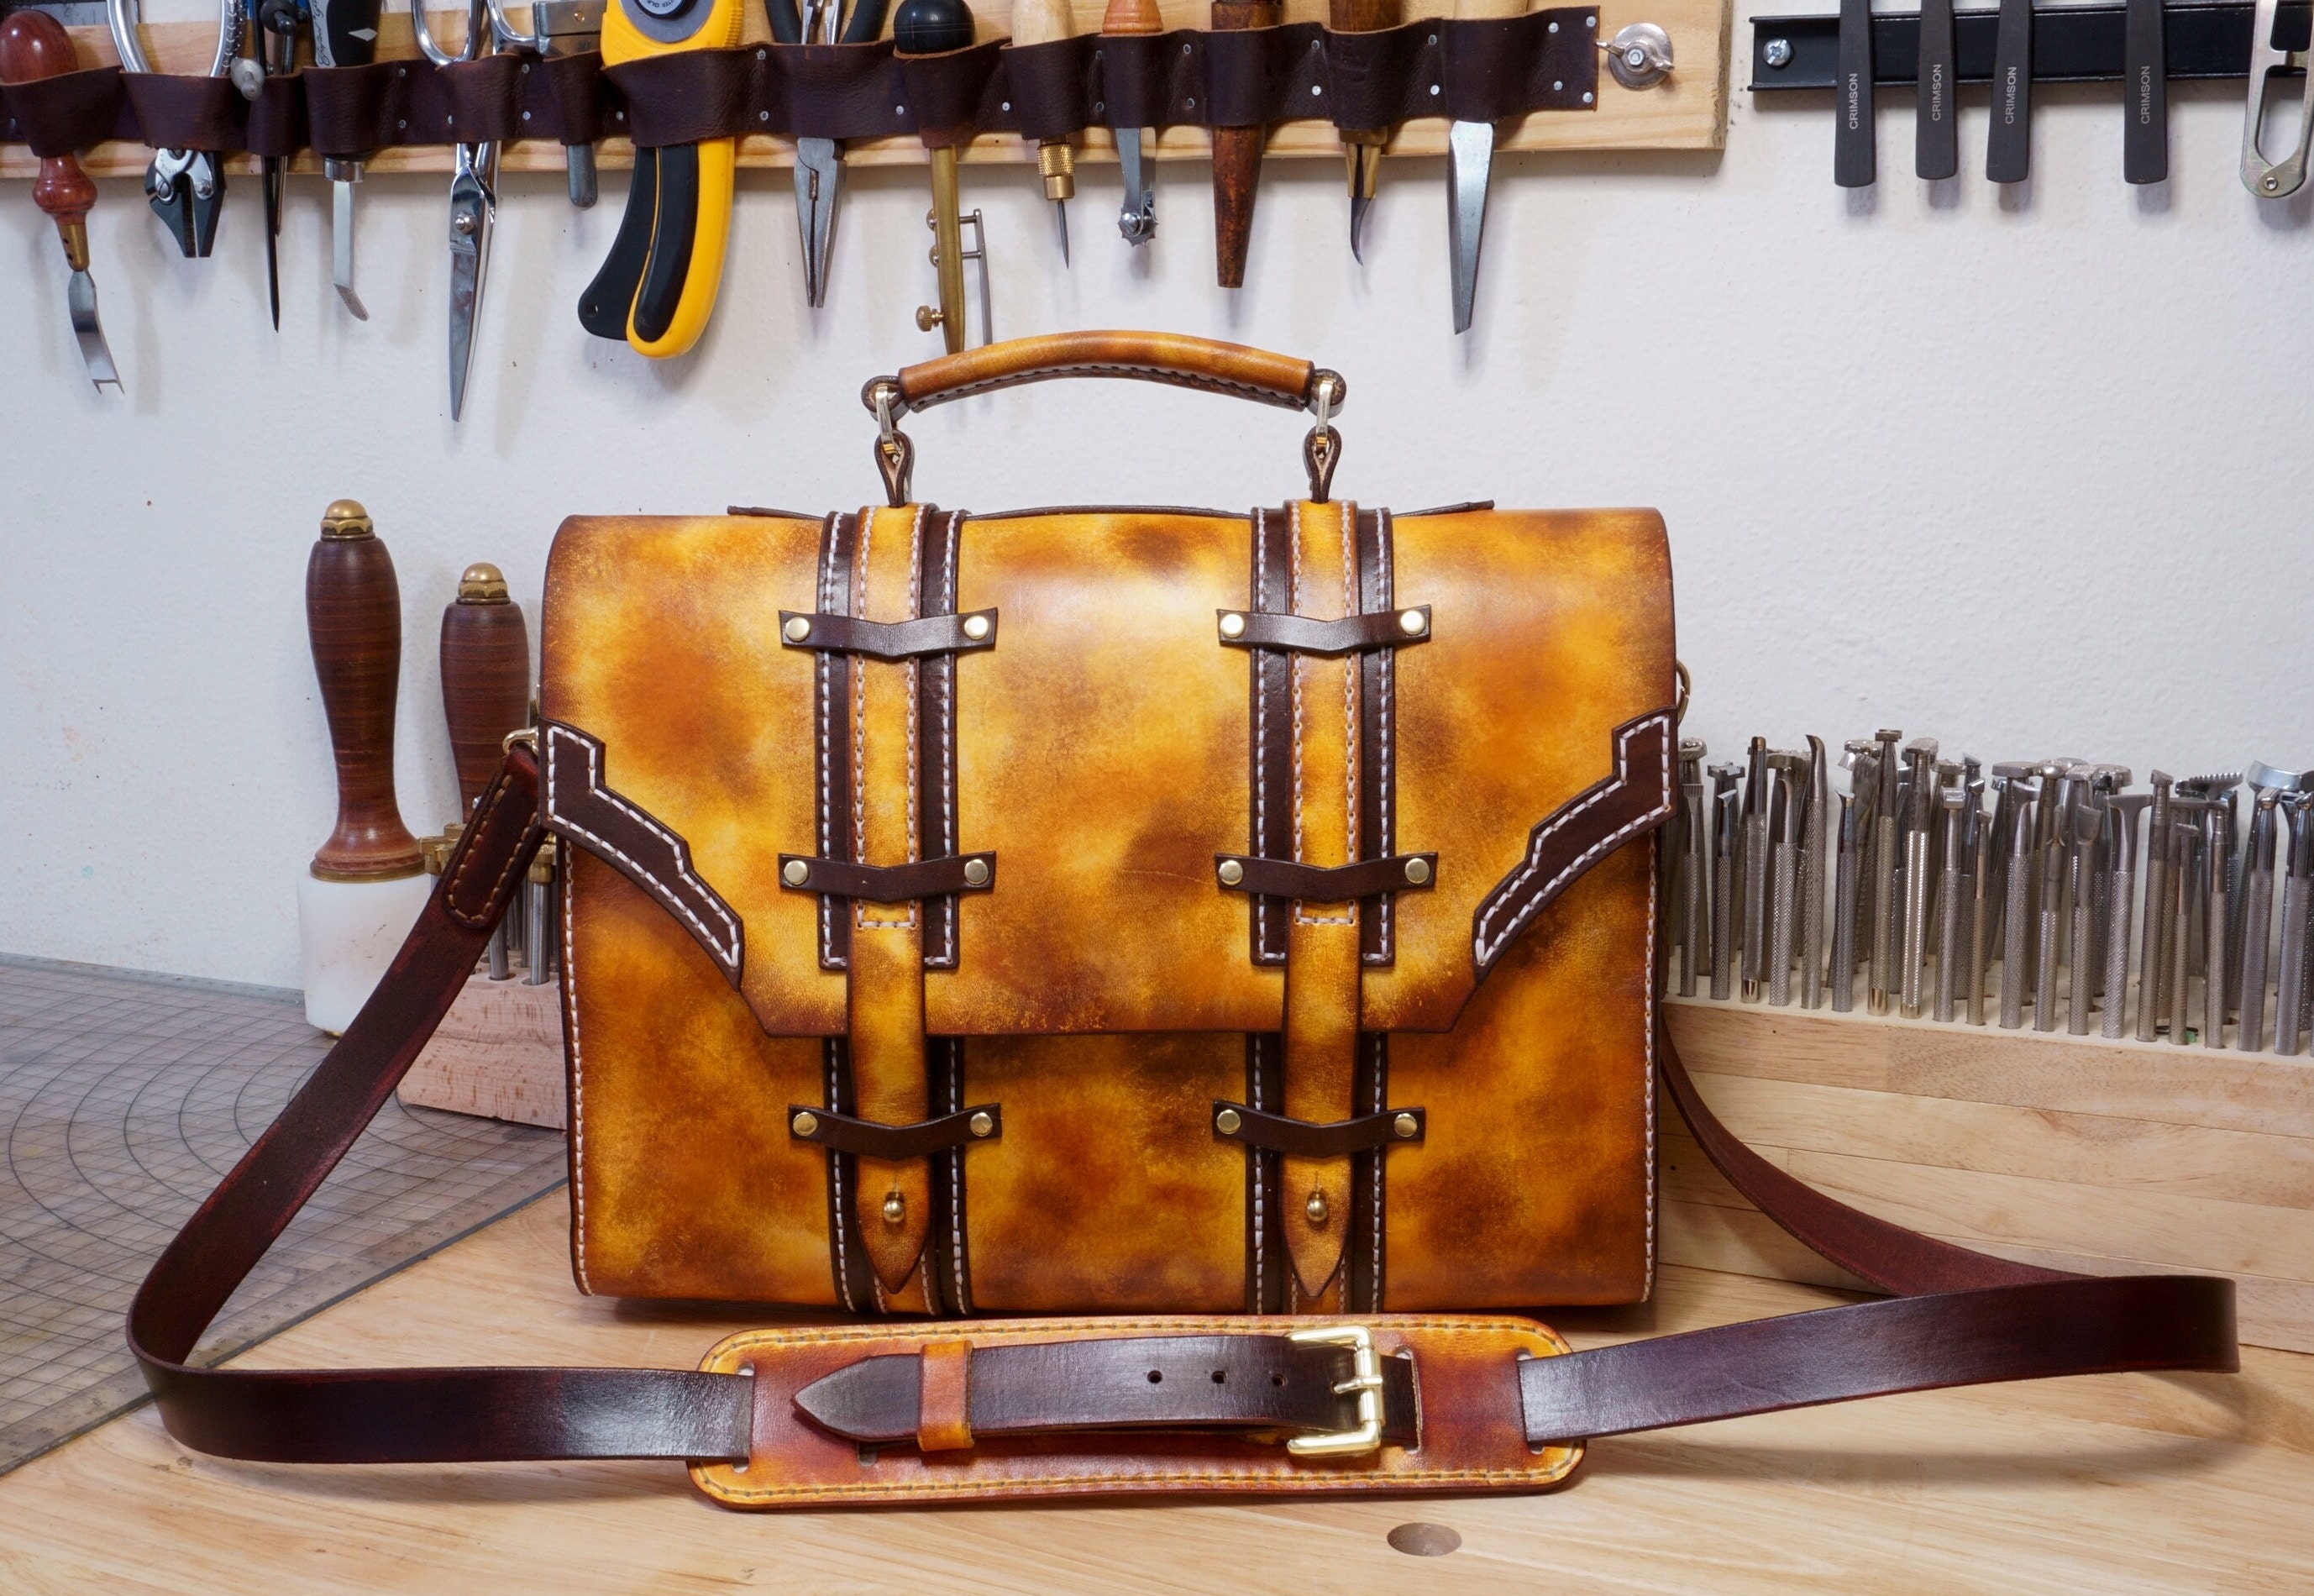 Polare Full Grain Leather Adjustable Replacement Shoulder Strap with Metal Hook for Briefcase Messenger Shoulder Duffel Bag